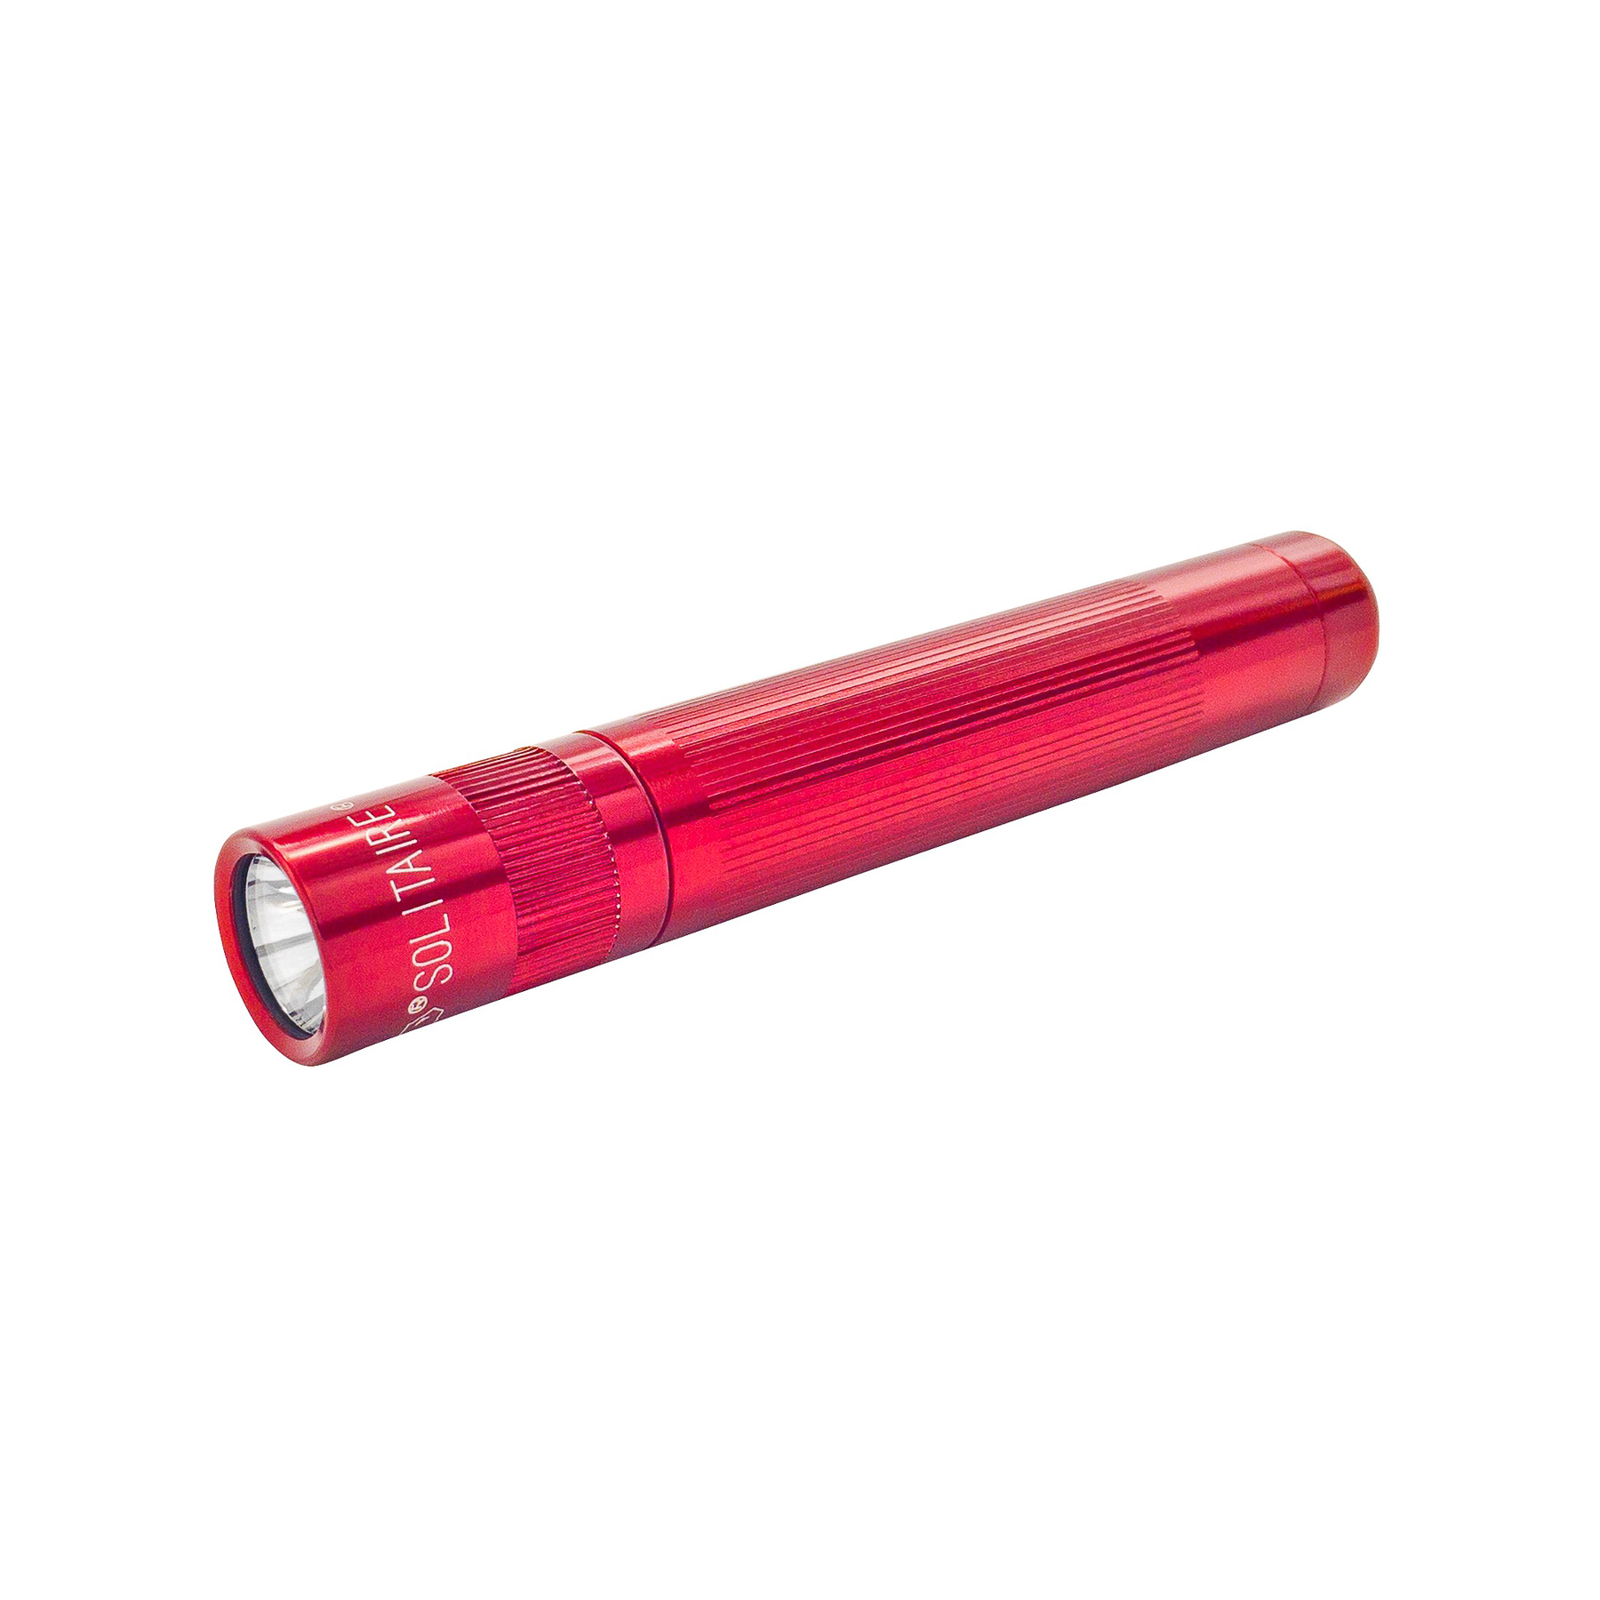 Maglite Xenónová baterka Solitaire 1-Cell AAA červená